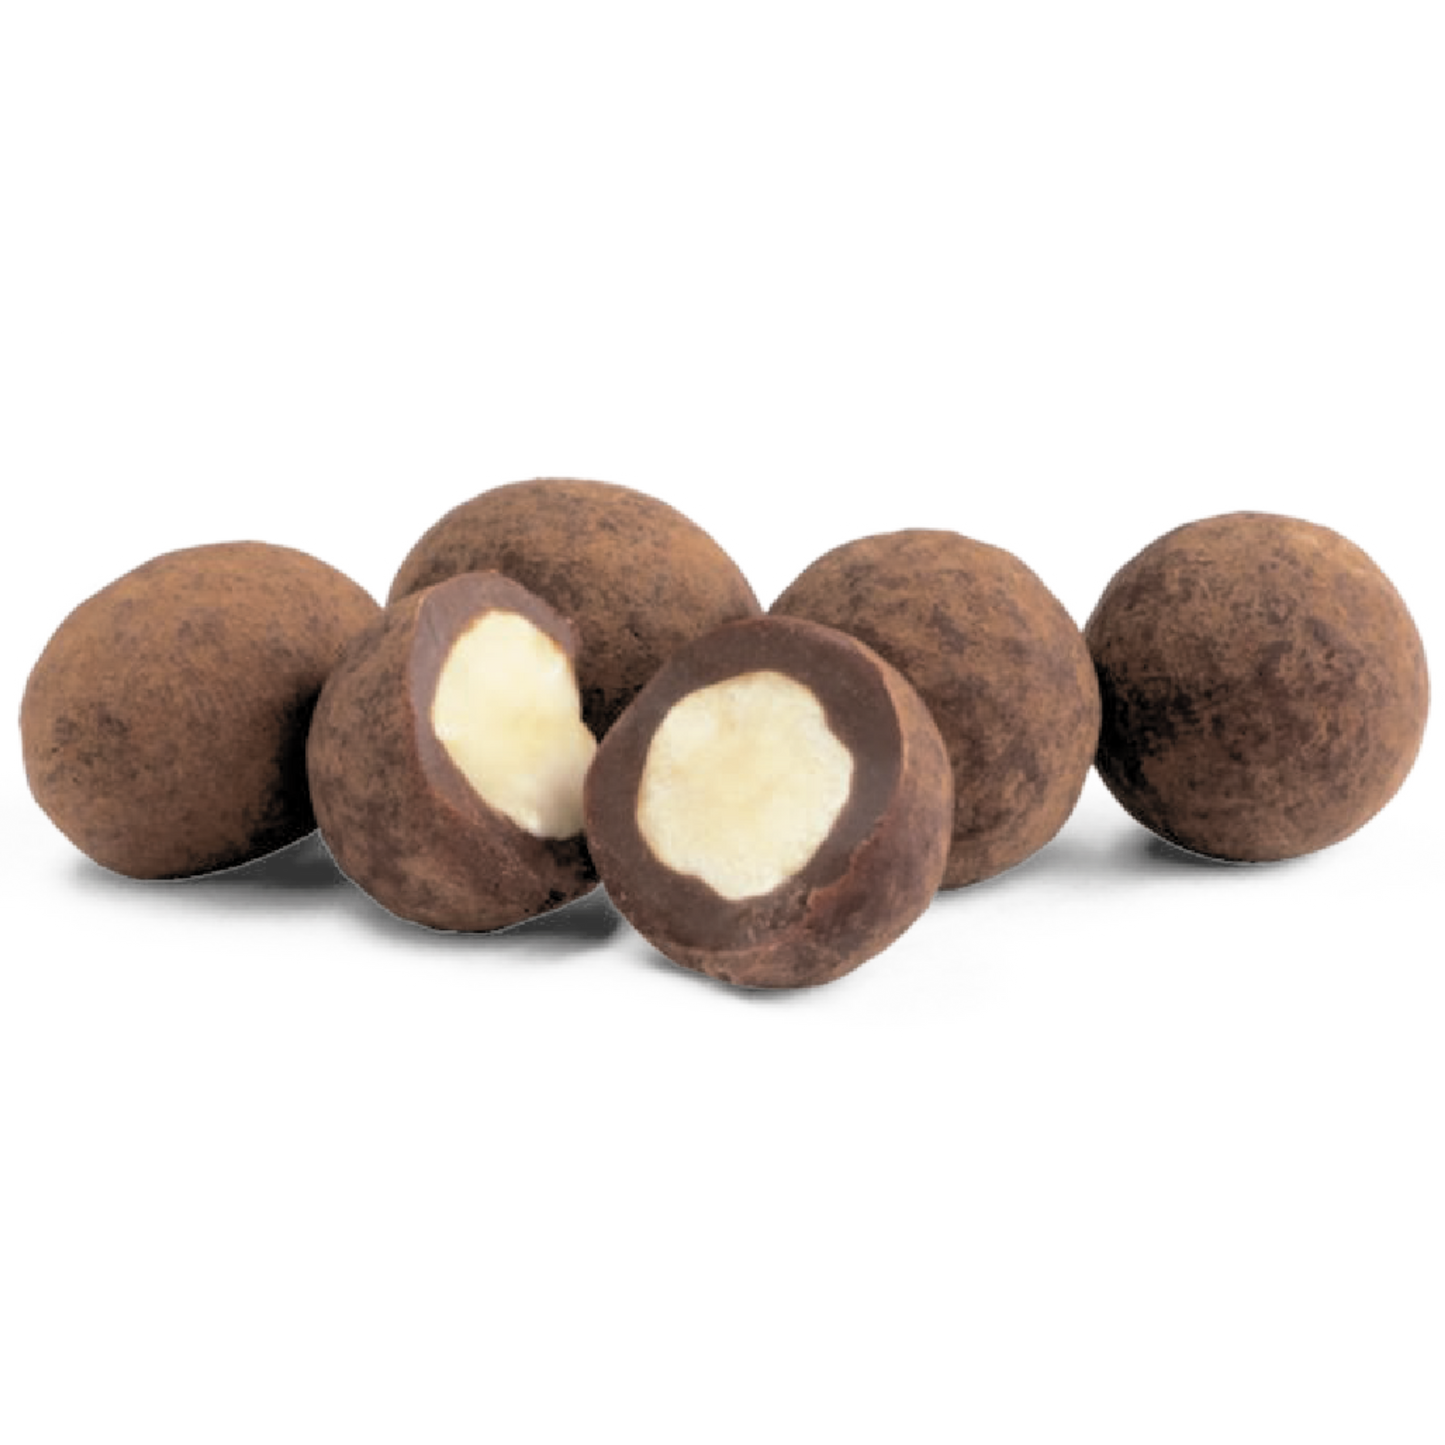 Salted Chocolate Hazelnuts